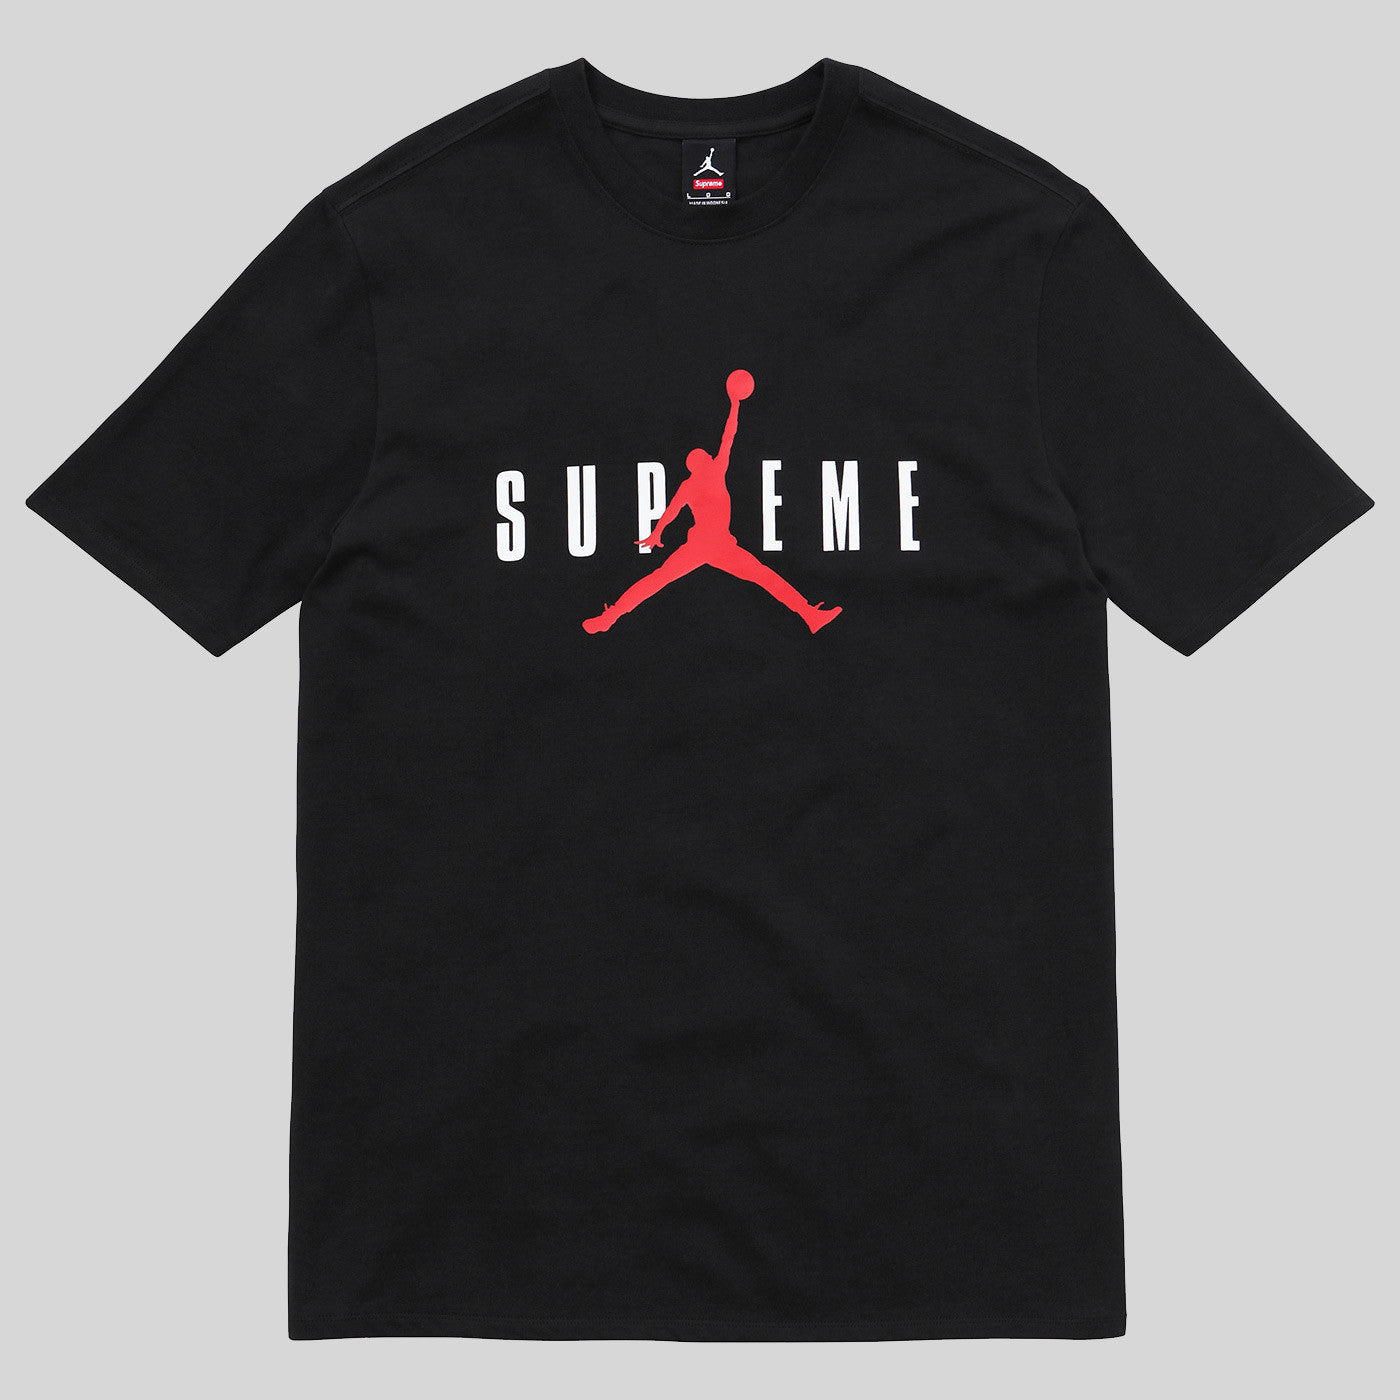 supreme x jordan shirt